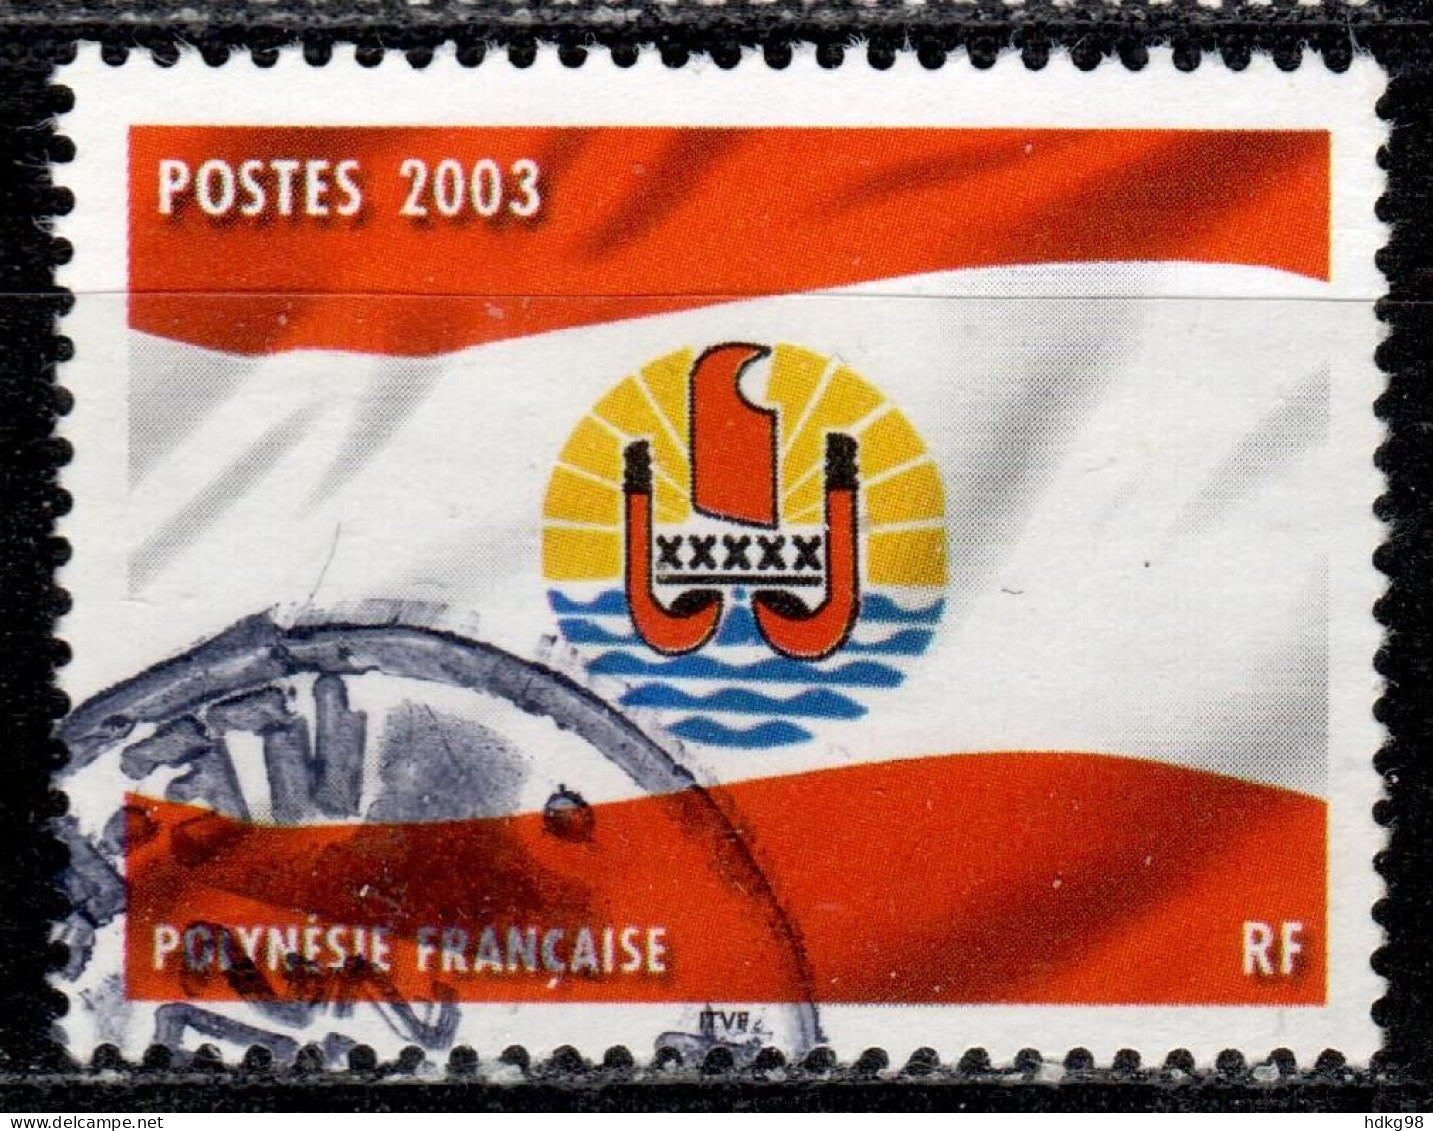 F P+ Polynesien 2003 Mi 898 Fahne - Used Stamps